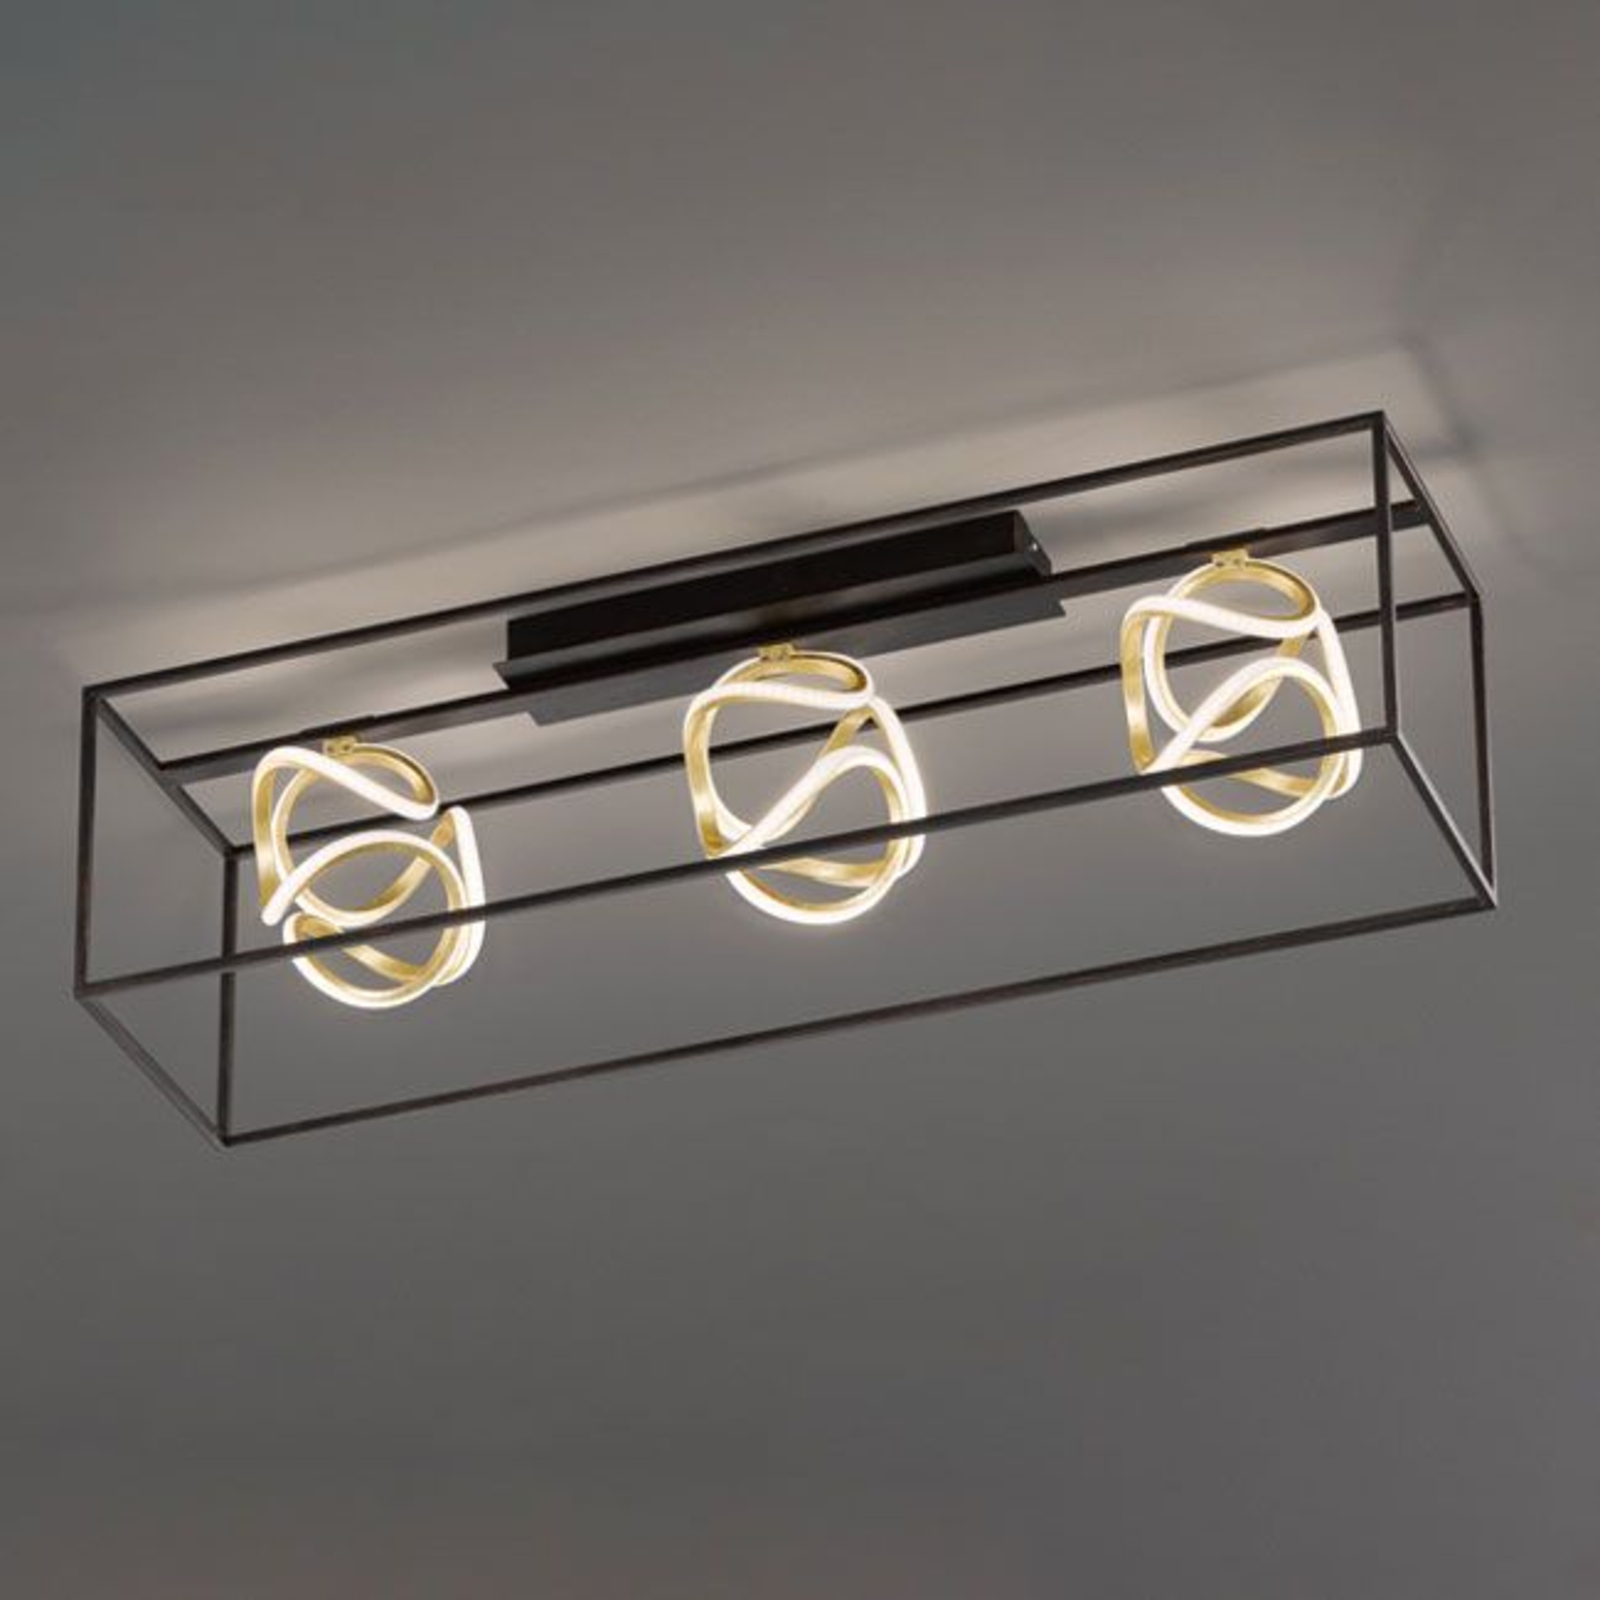 LED plafondlamp Gesa met metalen kooi